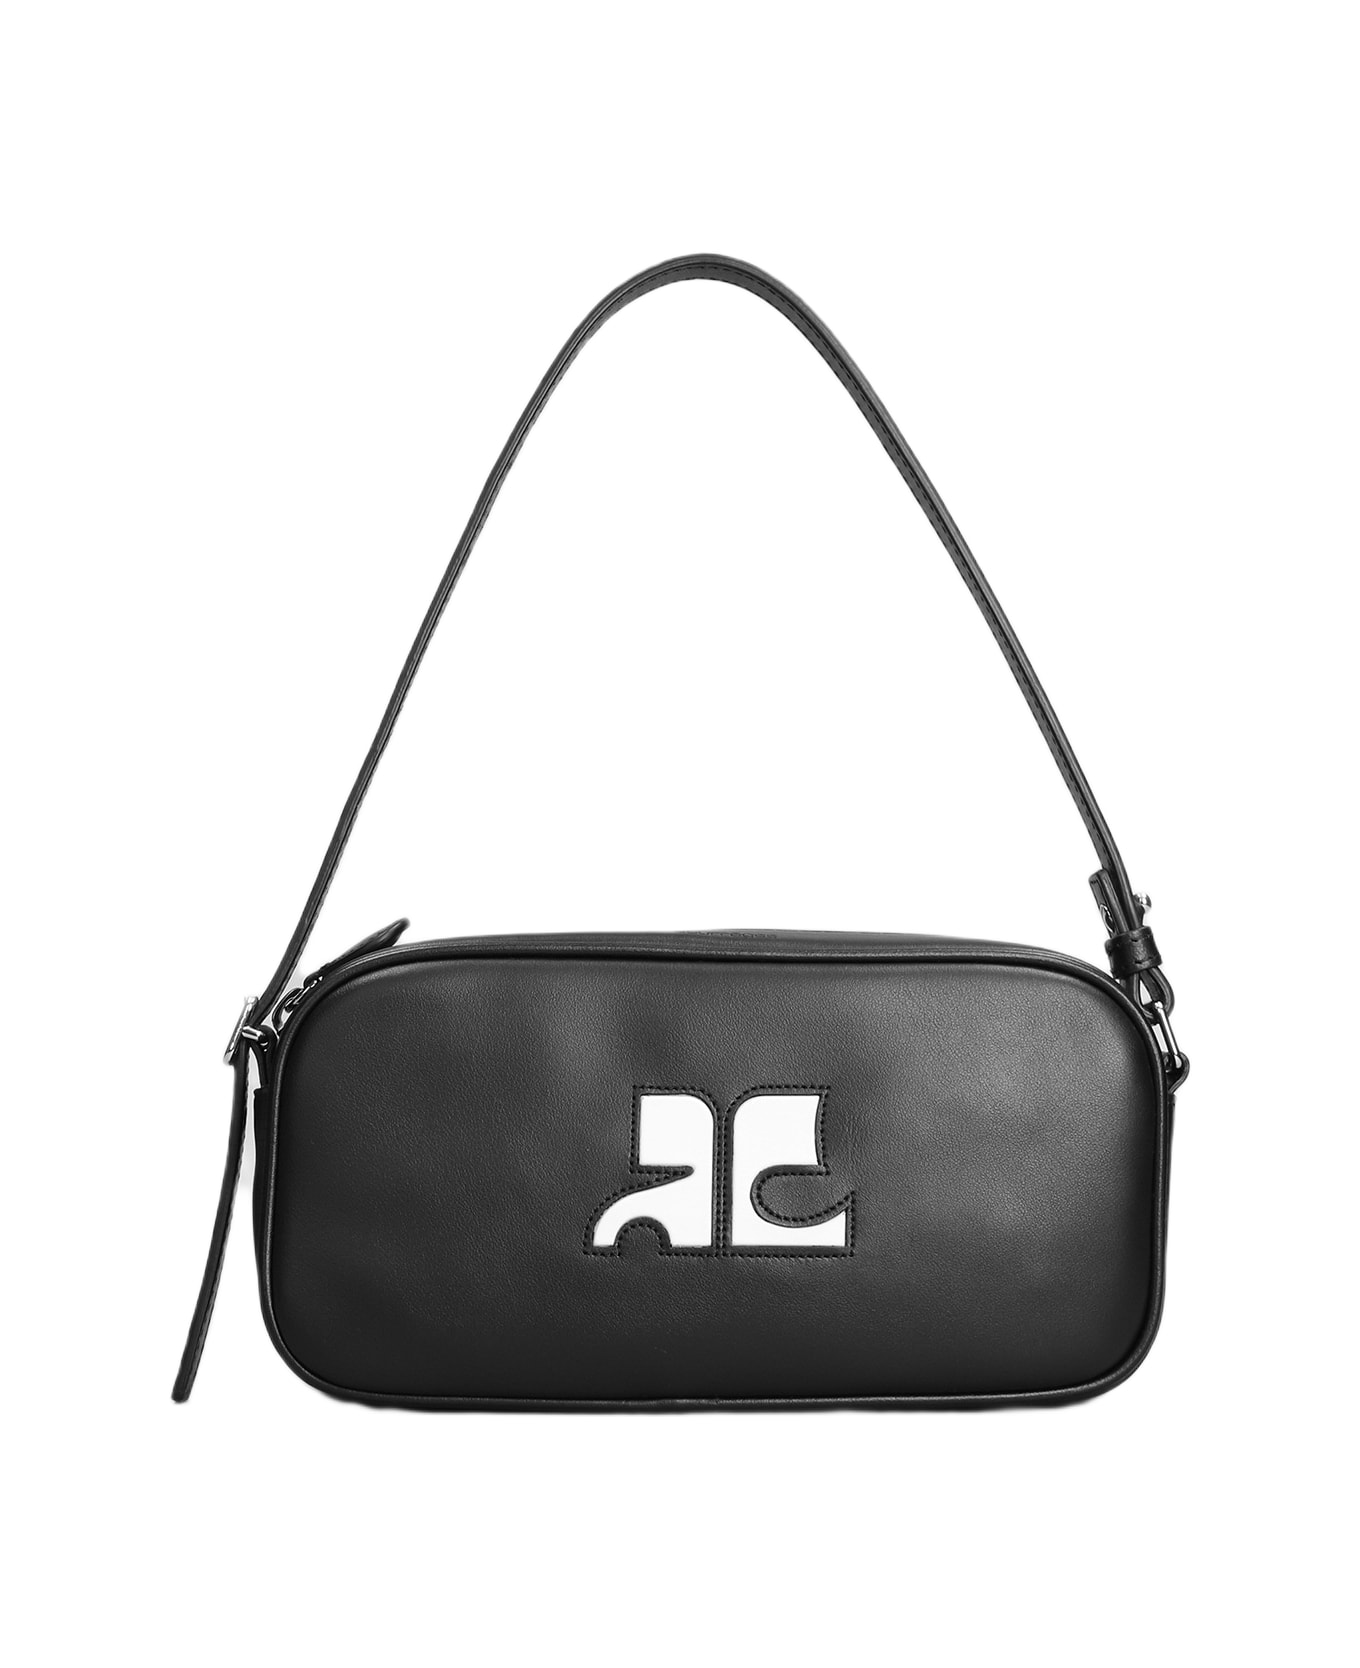 Courrèges Baguette Hand Bag In Black Leather - black